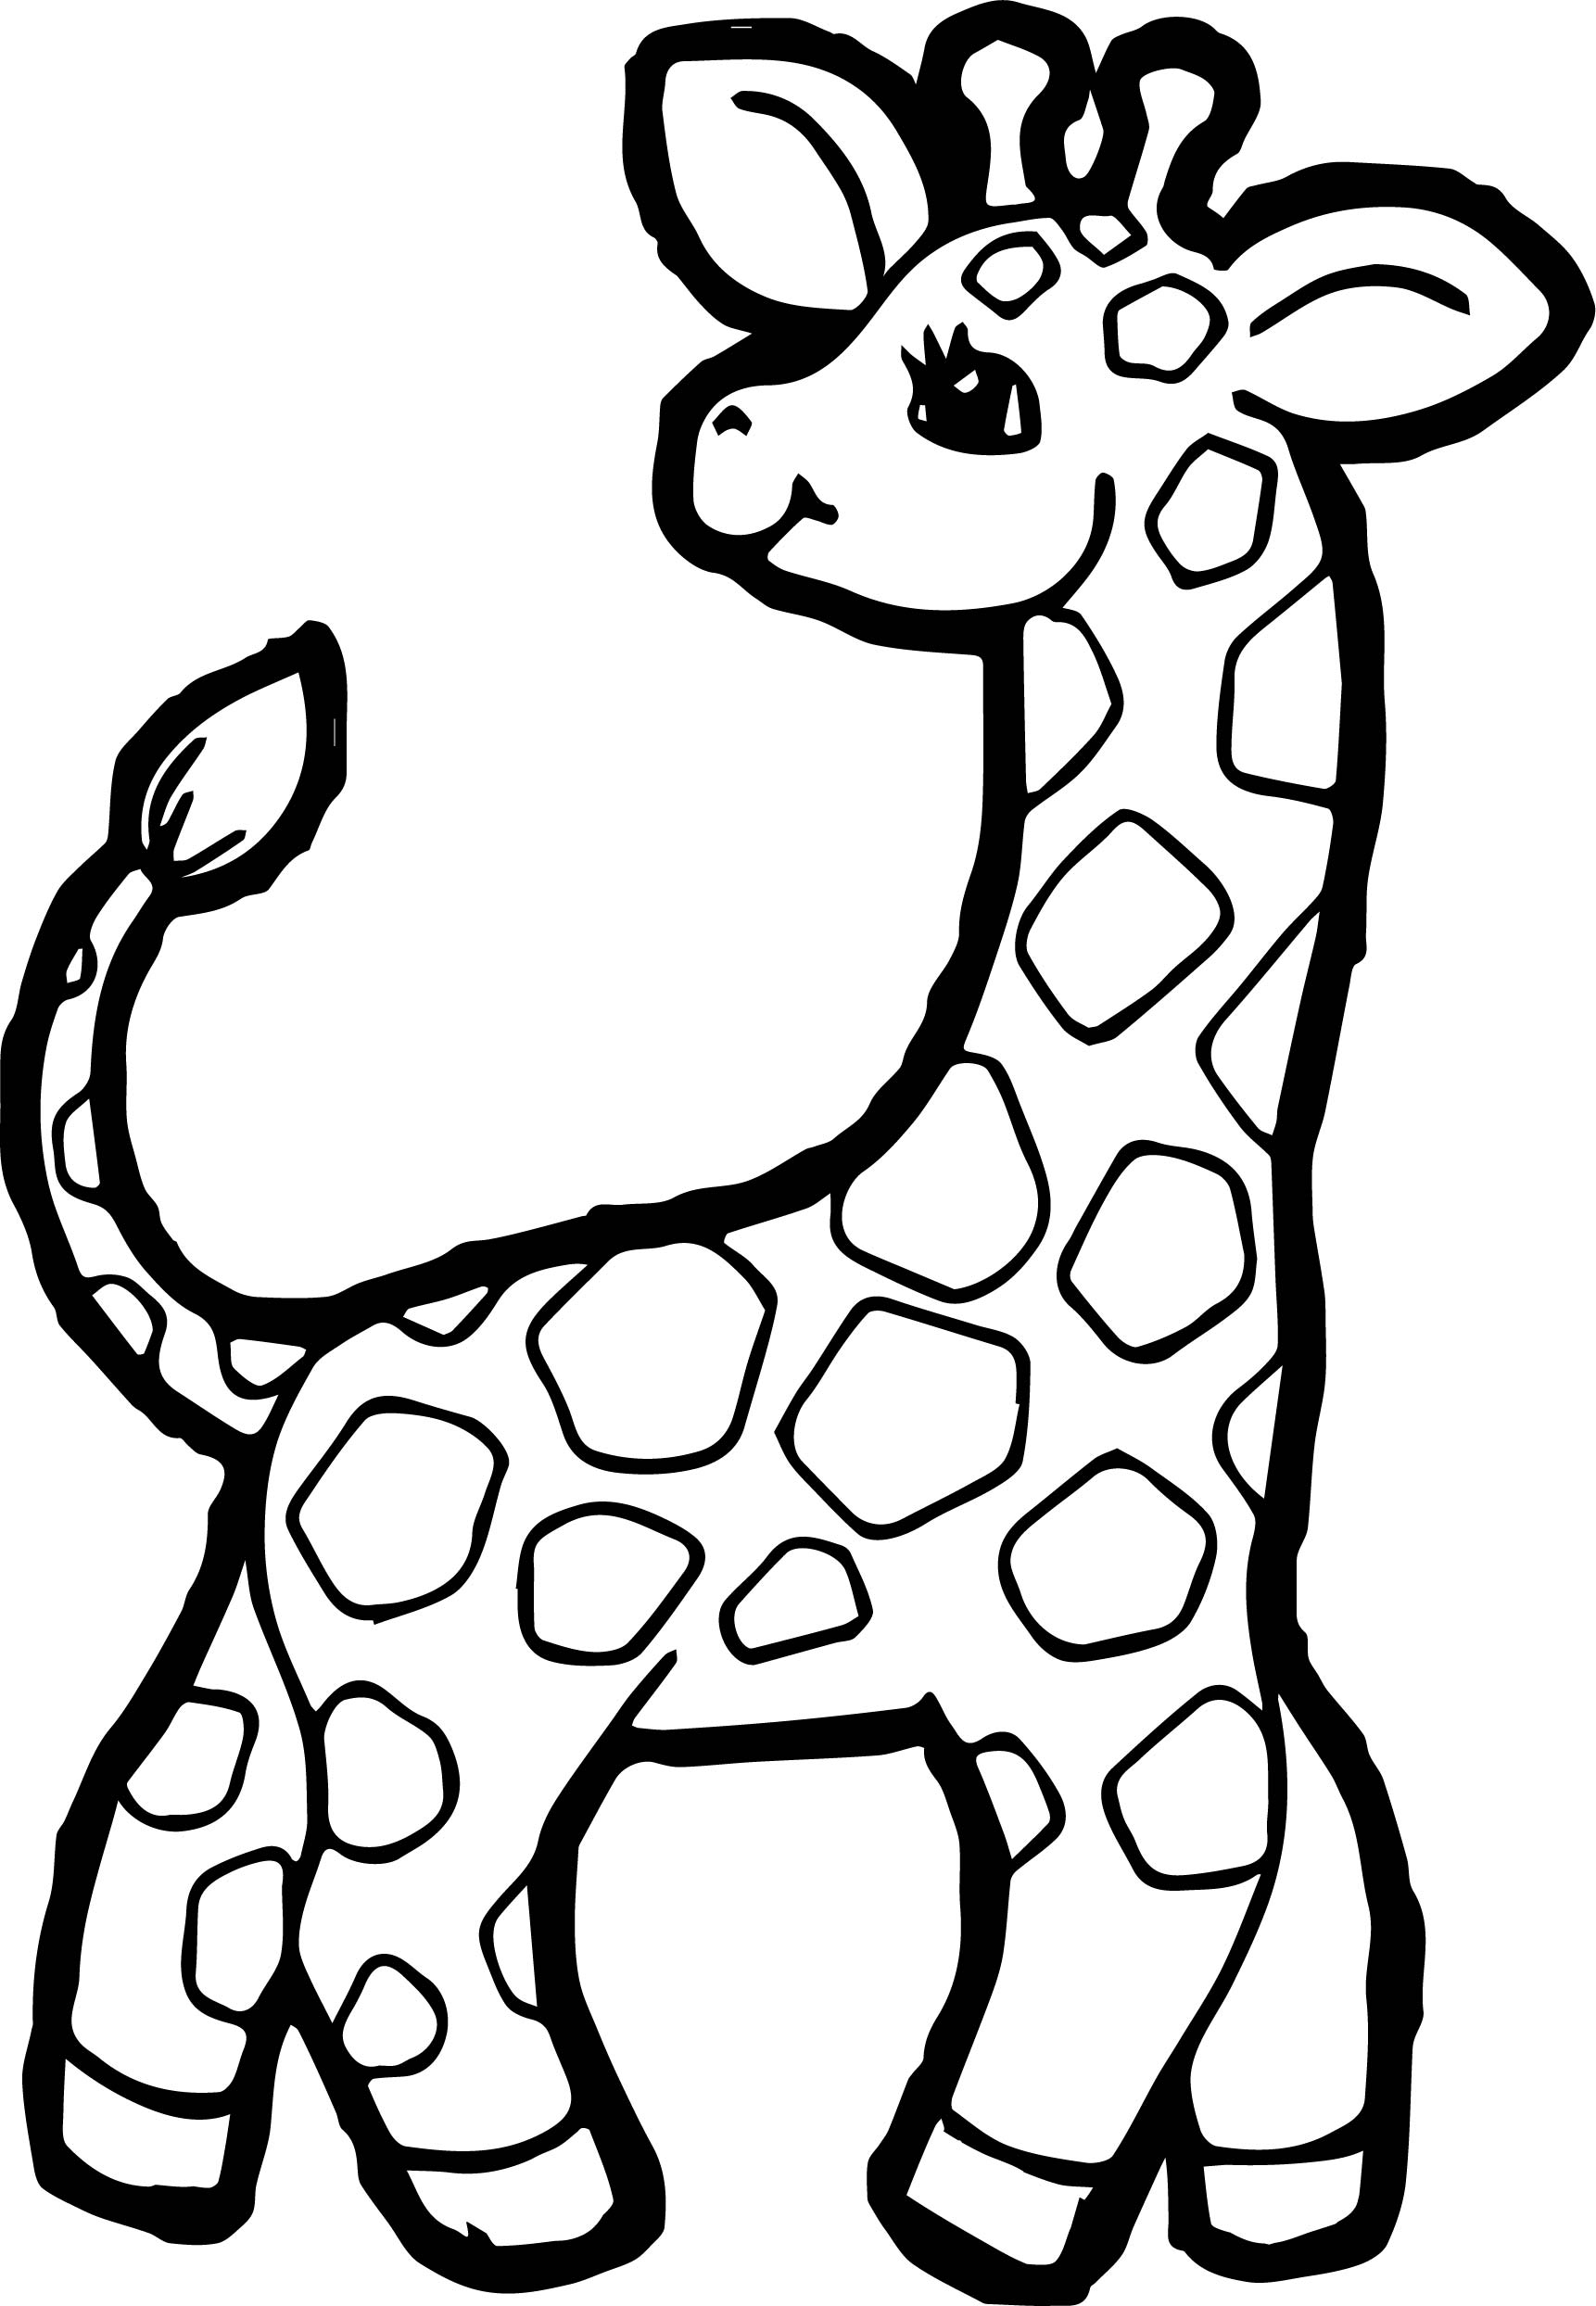 july-2012-what-shauna-knows-sewing-stuffed-animals-giraffe-toy-stuffed-toys-patterns